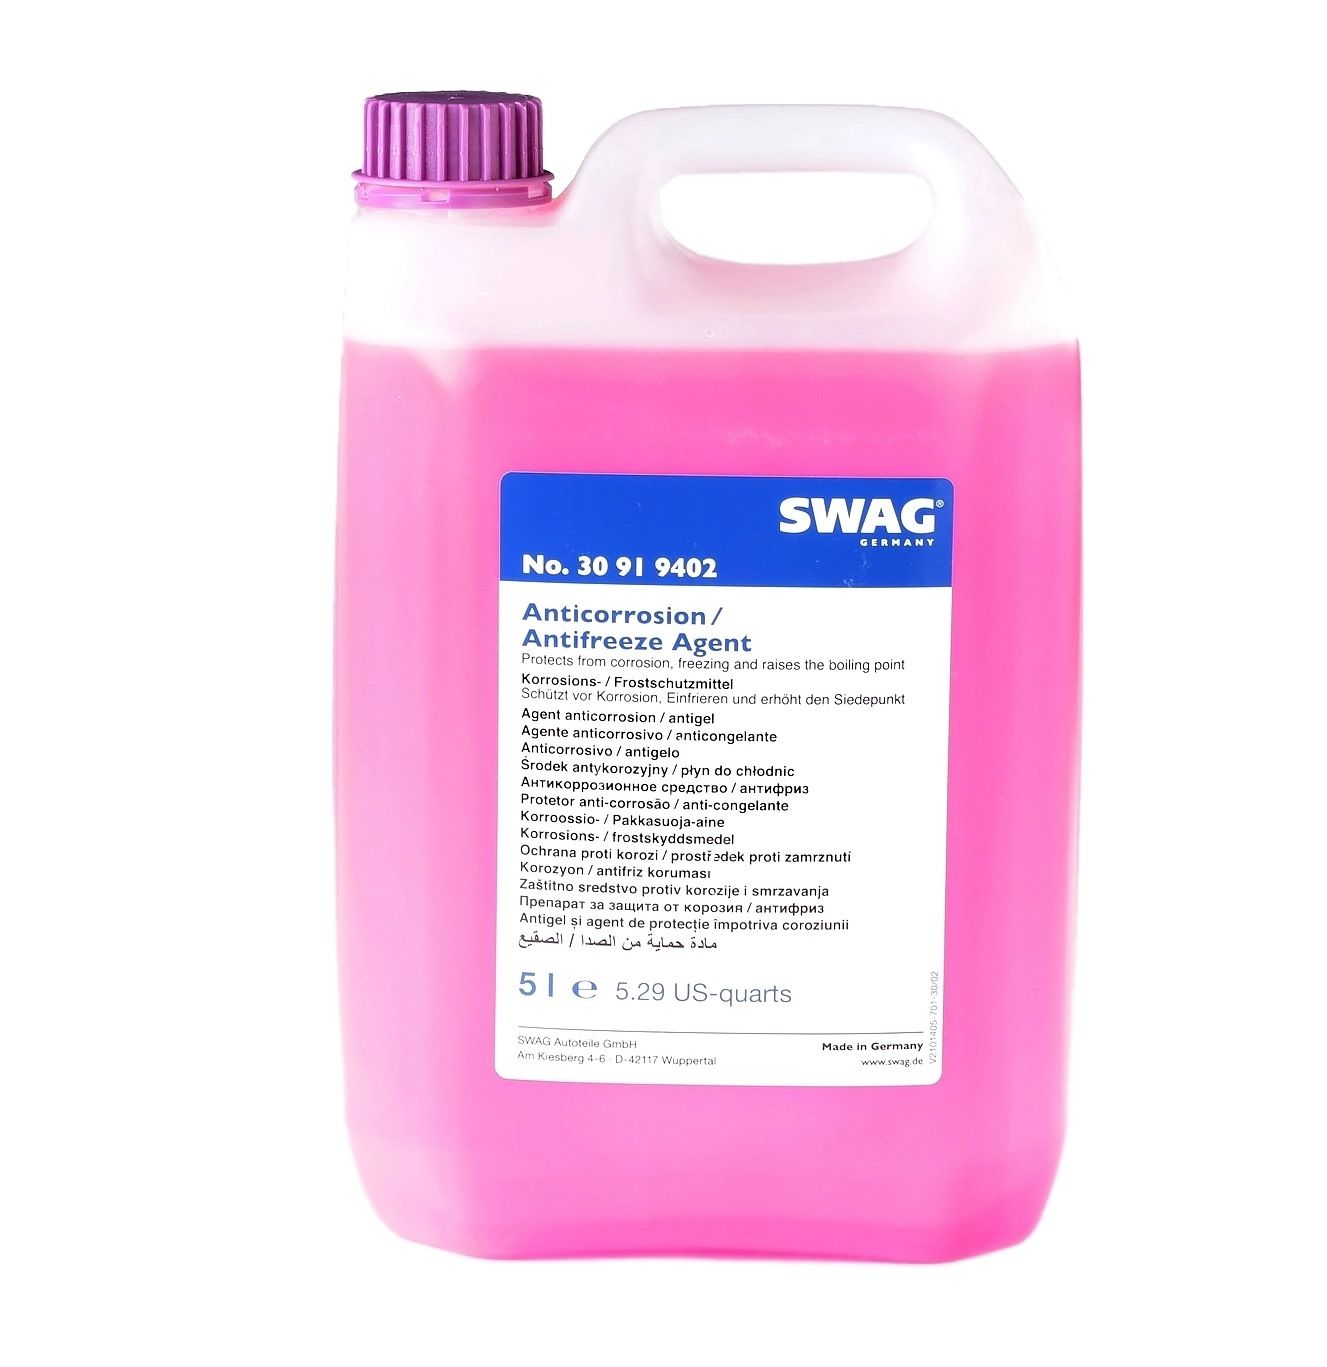 SWAG 30 91 9402 Kühlerfrostschutz G12+ violett, lila, -38(50/50)